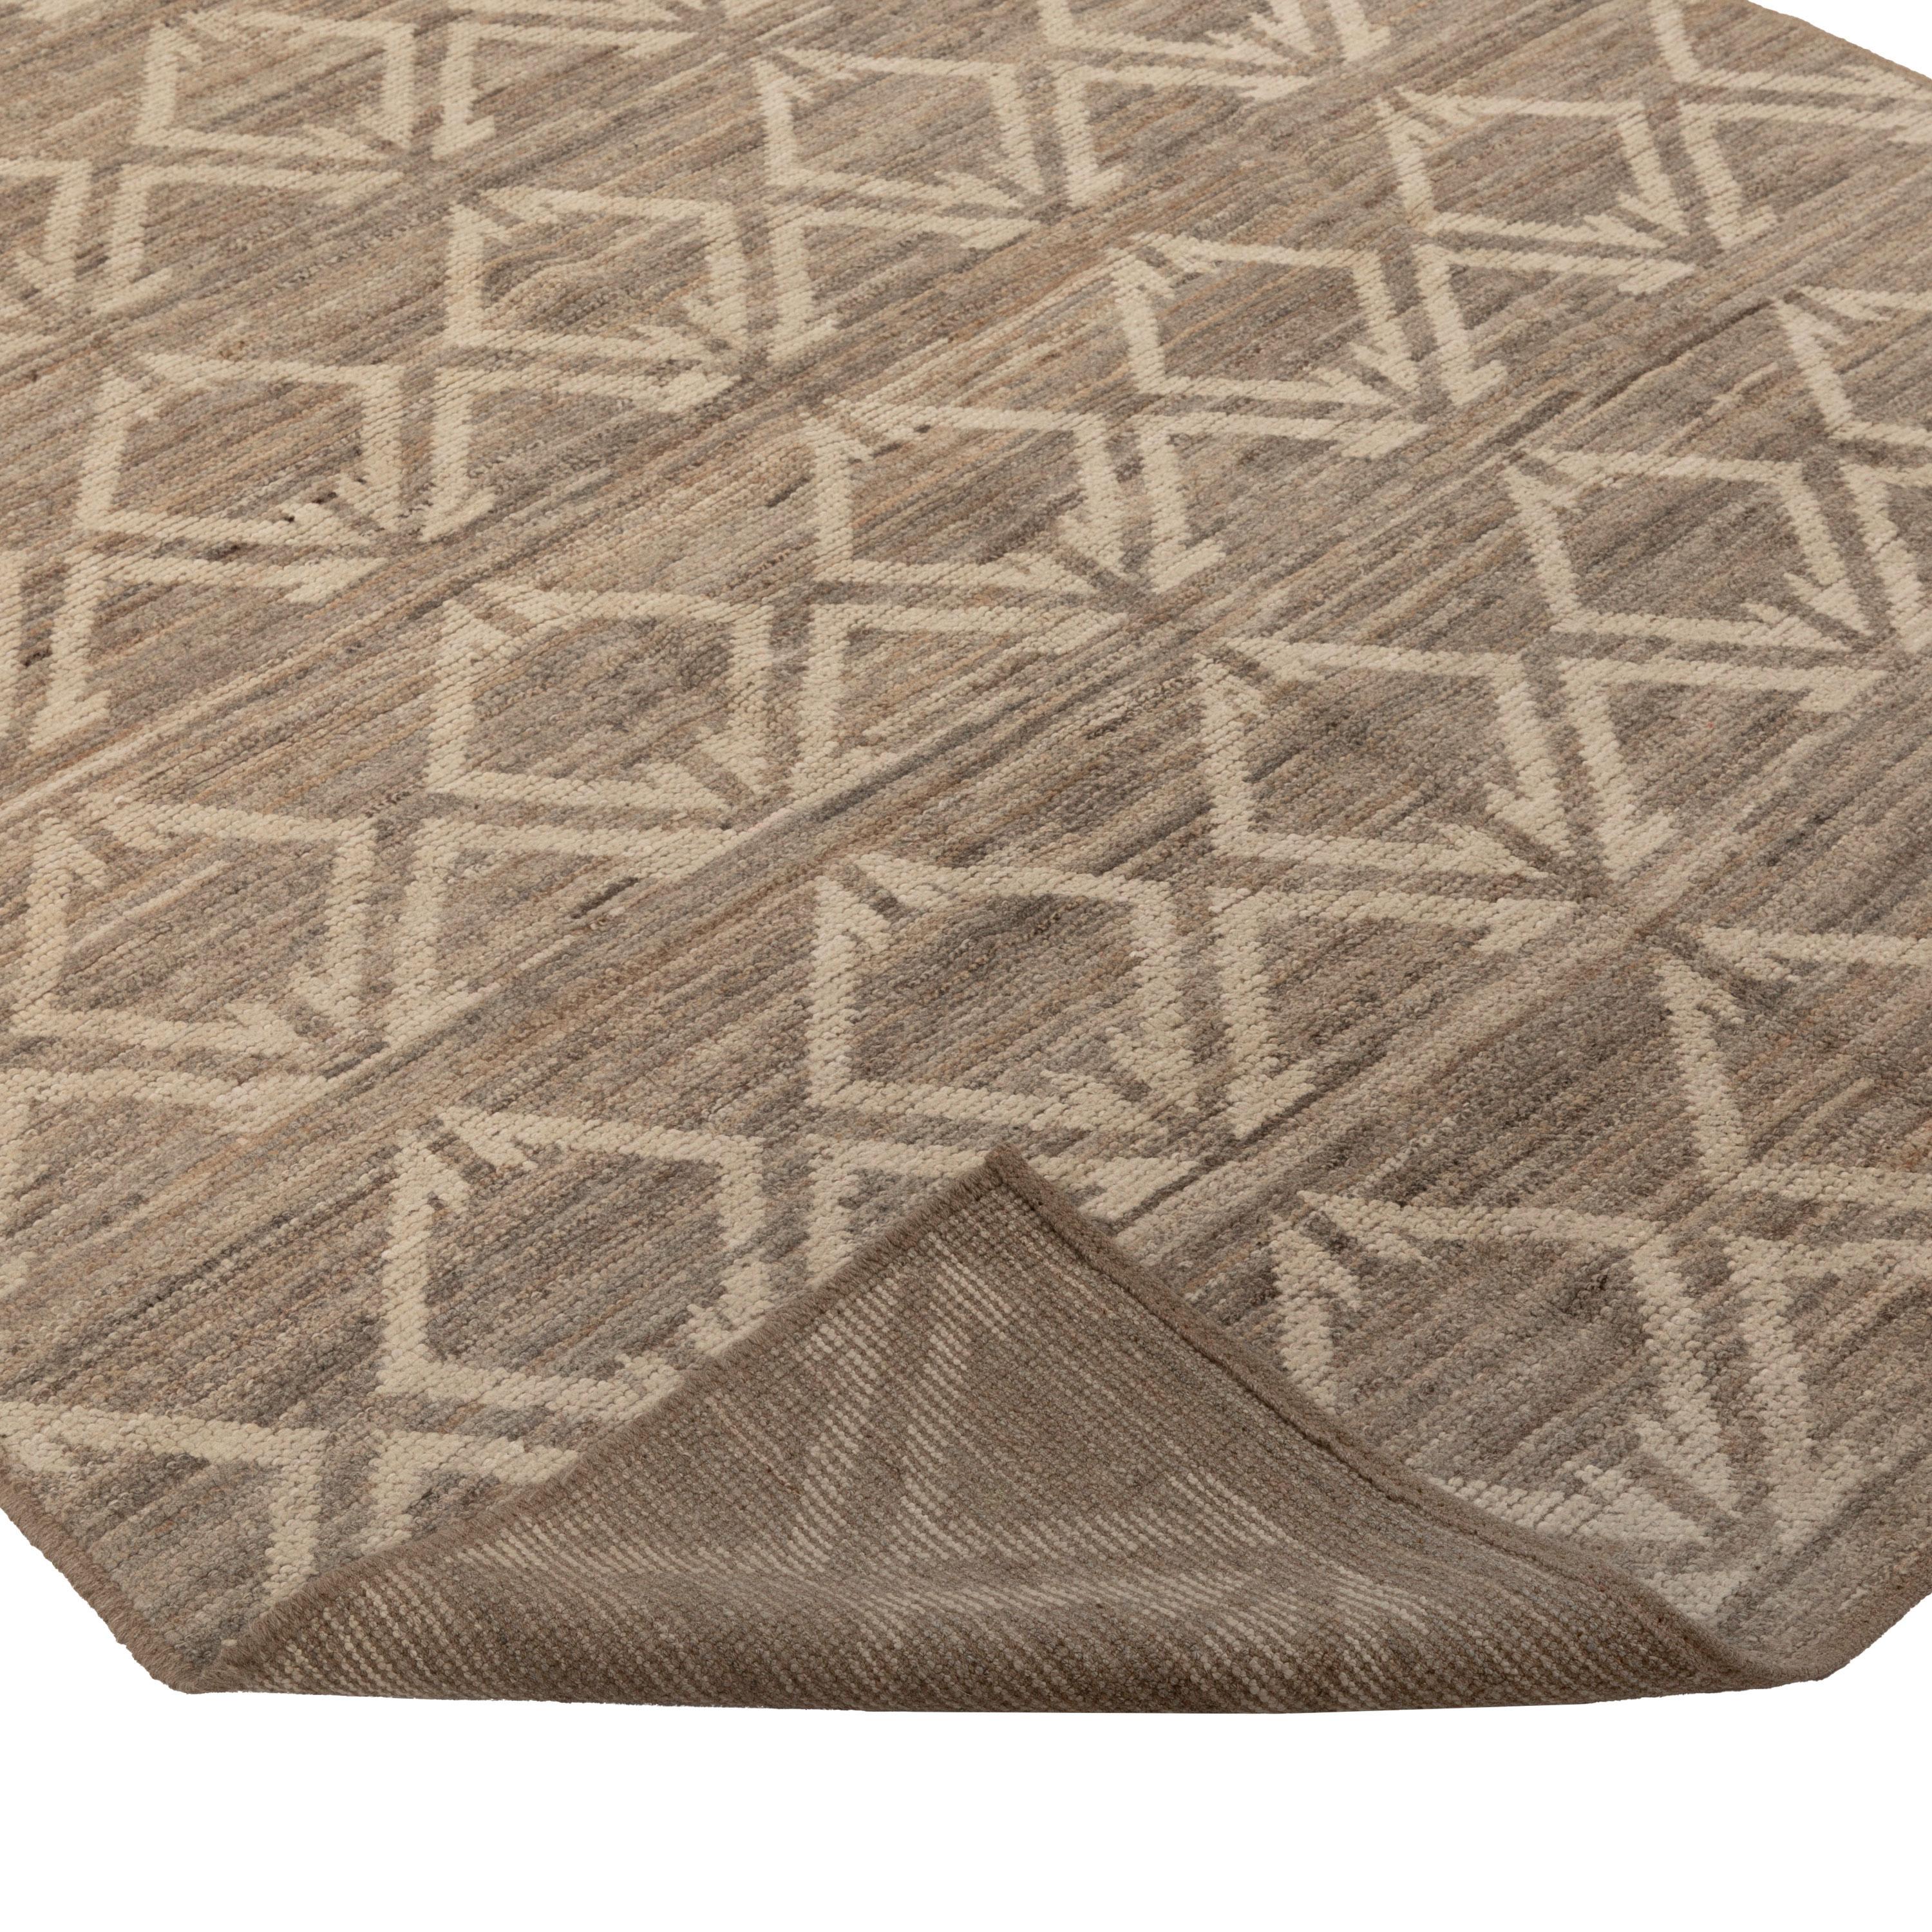 Afghan abc carpet Zameen Brown and Cream Modern Wool Rug - 5'6